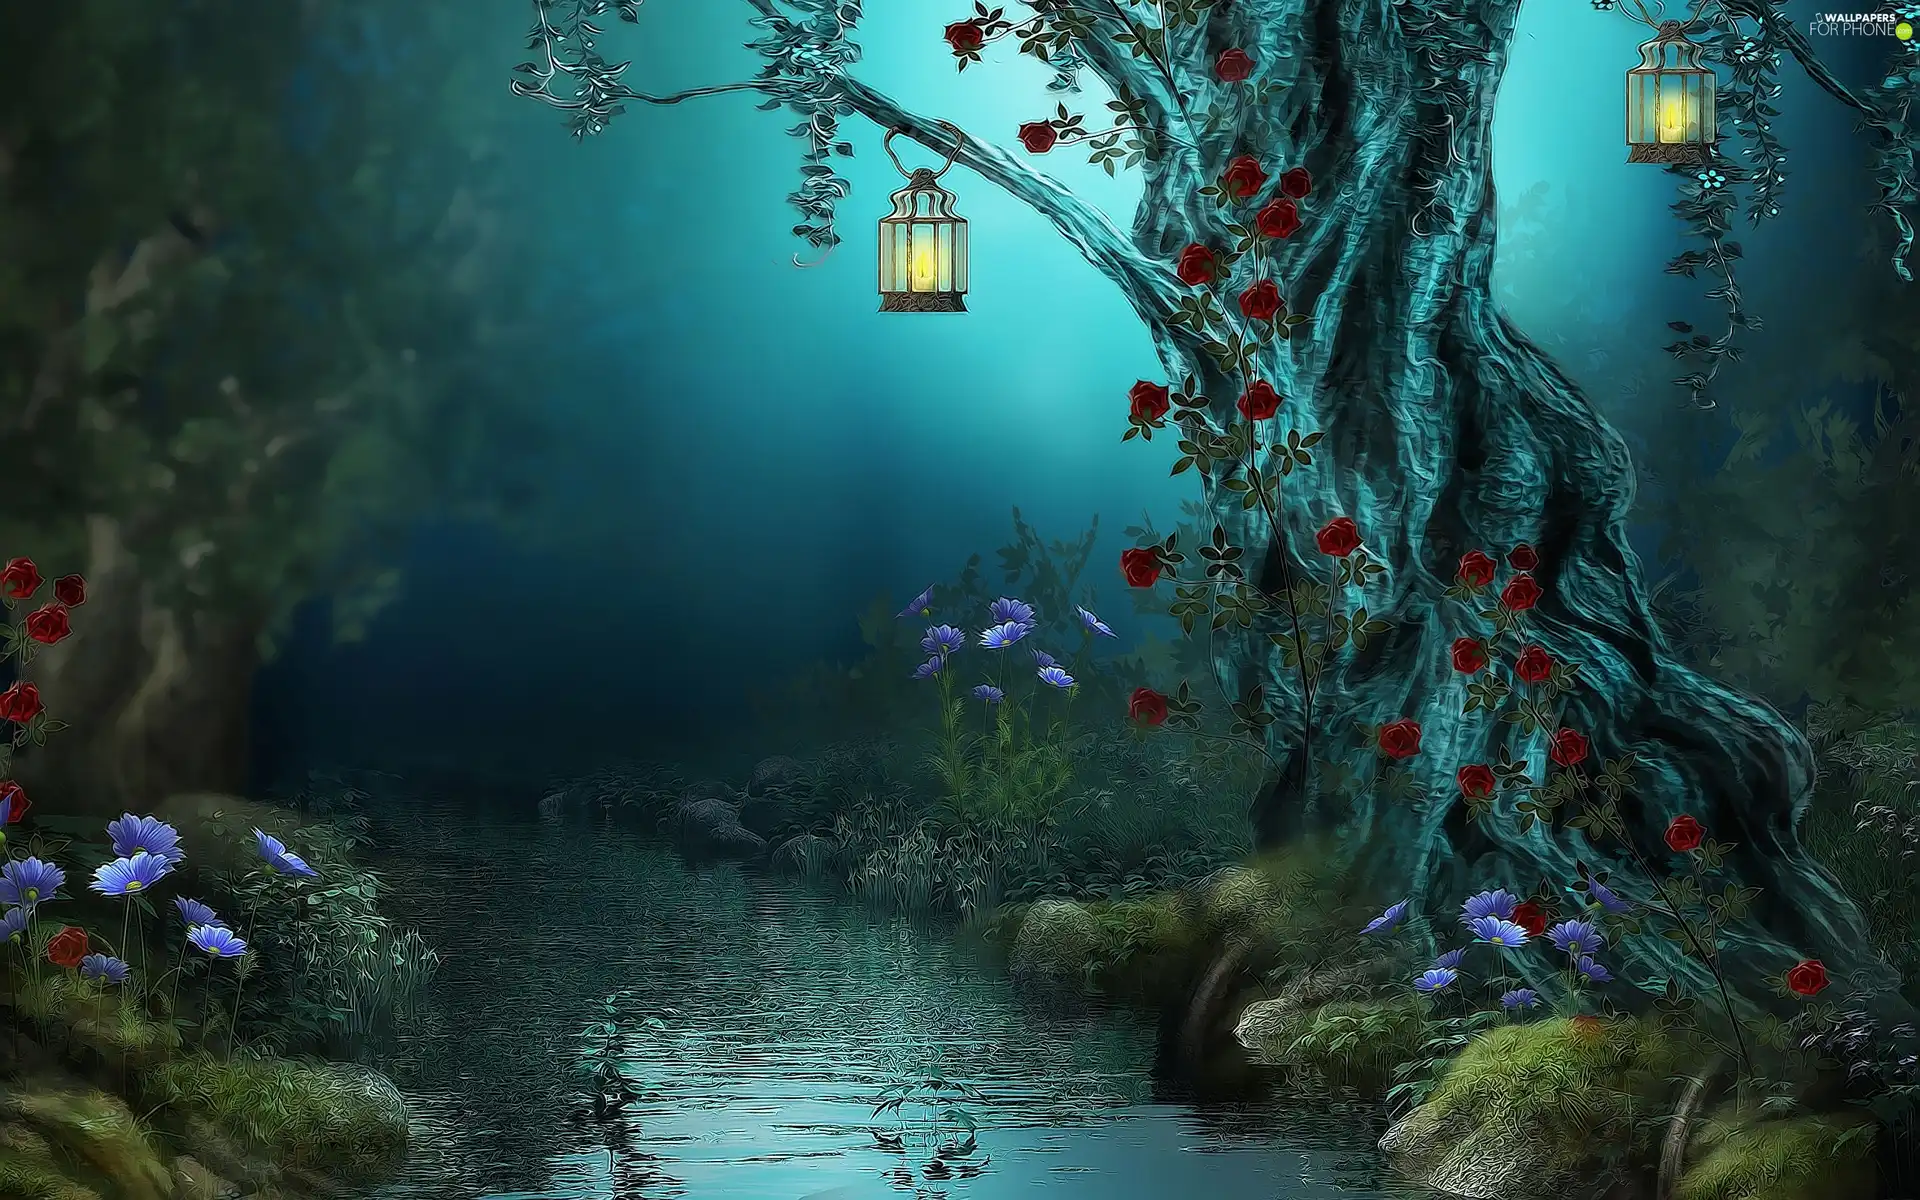 River, Lanterns, roses, trees